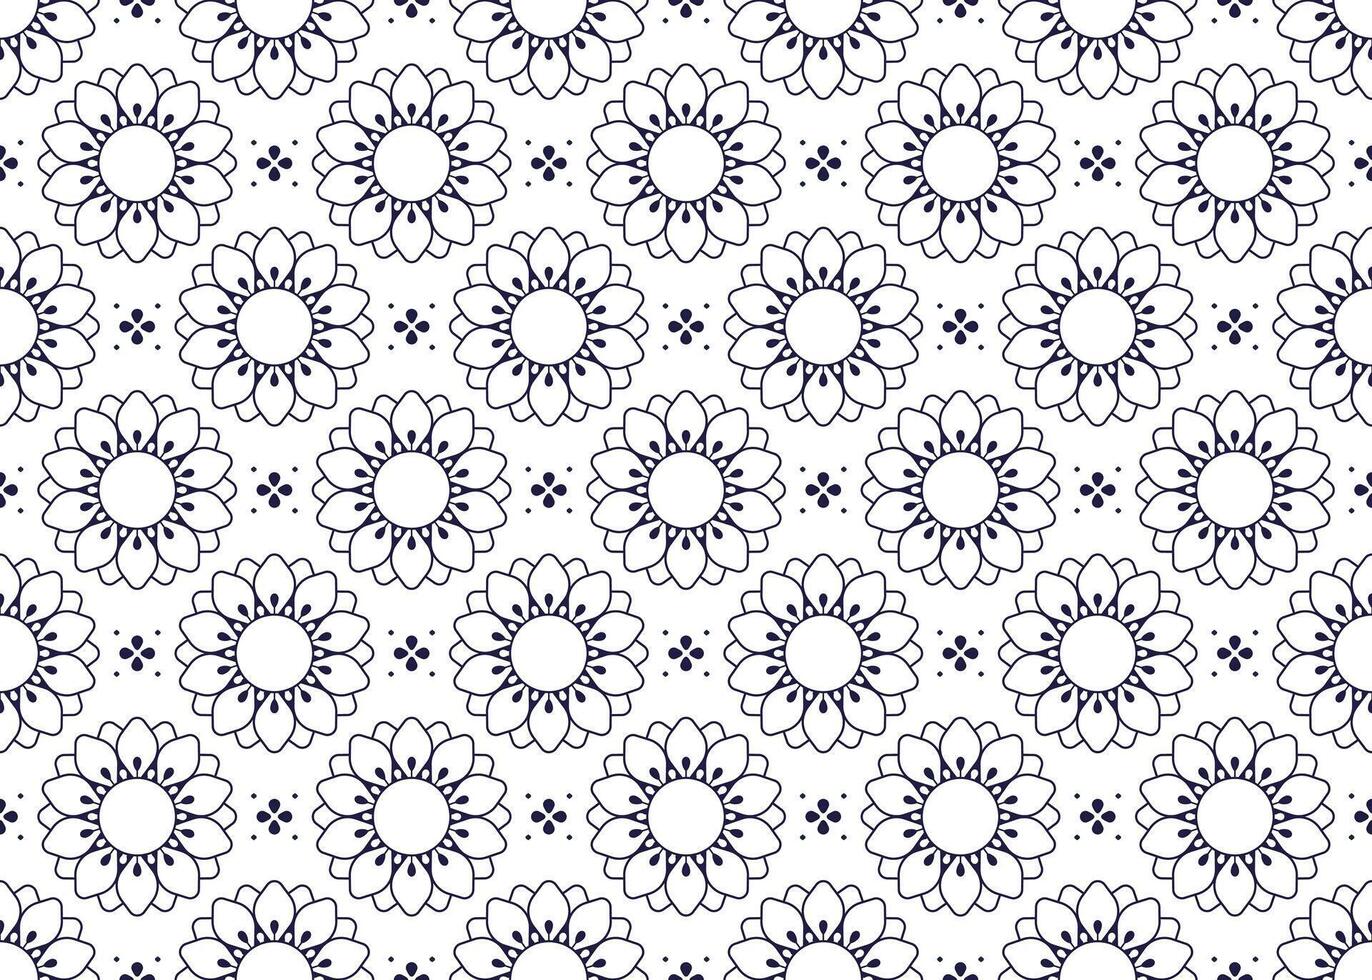 símbolo flores contorno en blanco fondo, étnico tela sin costura modelo diseño para paño, alfombra, batik, fondo de pantalla, envase etc. vector